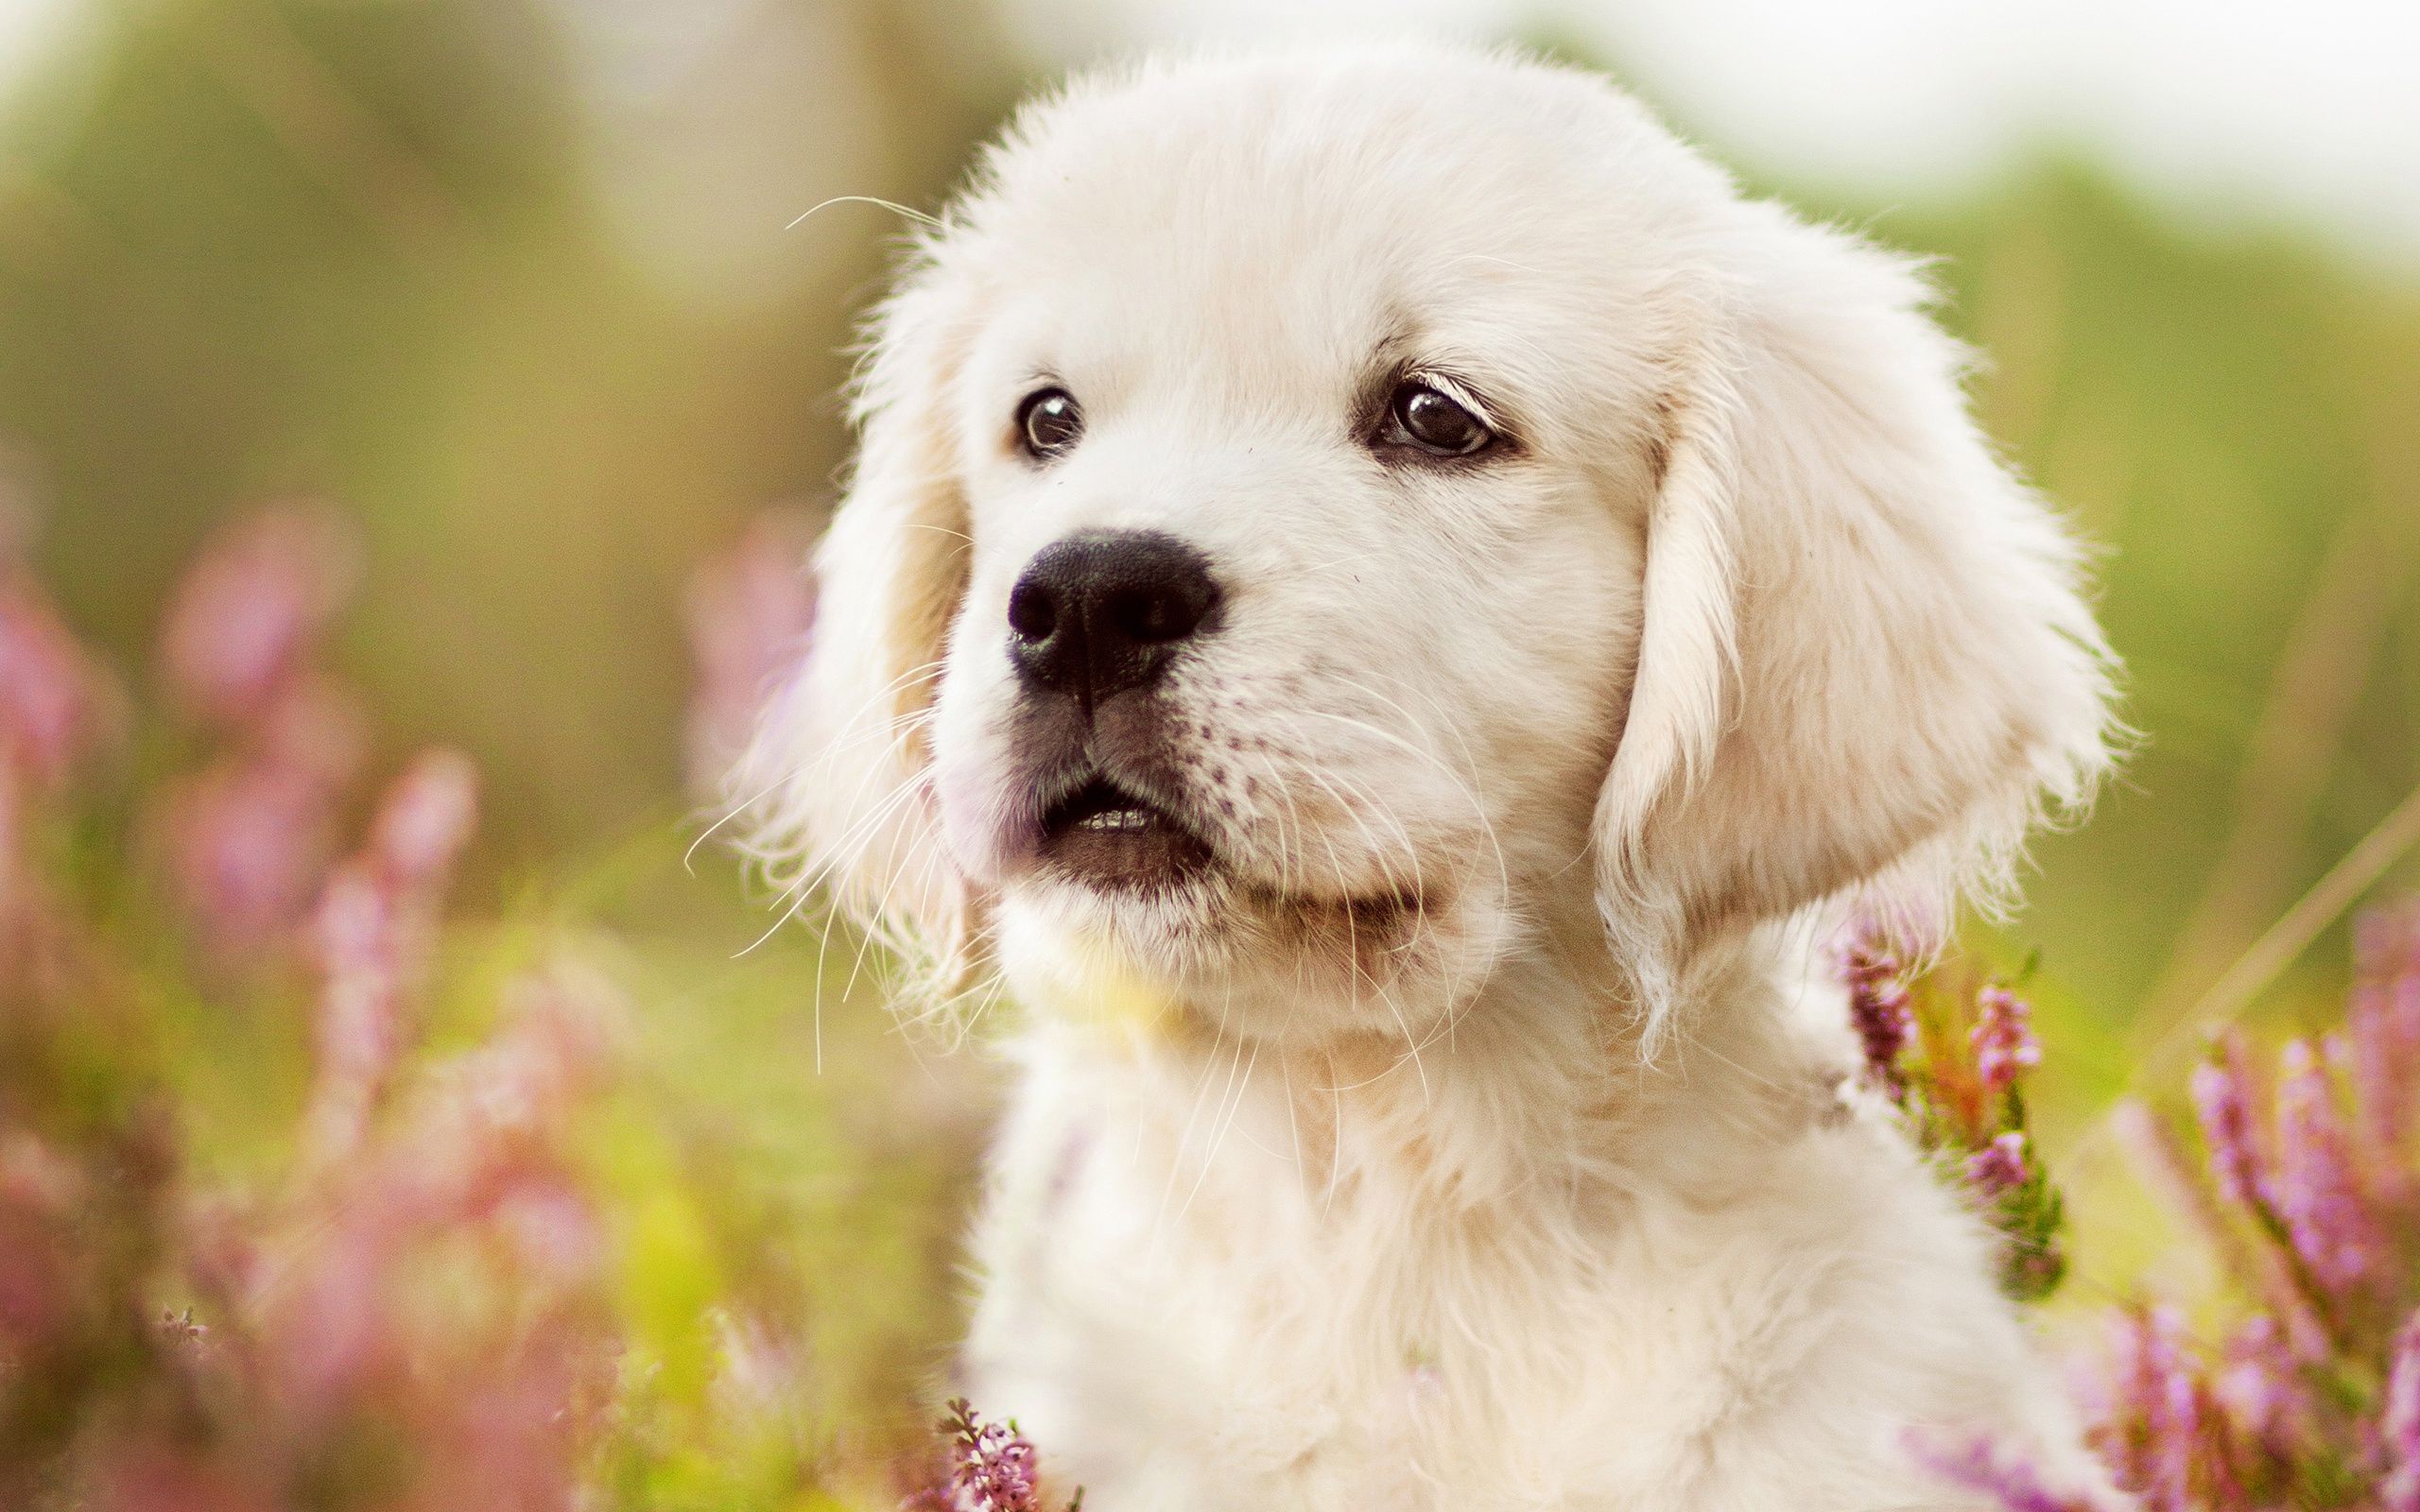 Free download Wallpaper of Baby Animal Dog Golden Retriever Pet